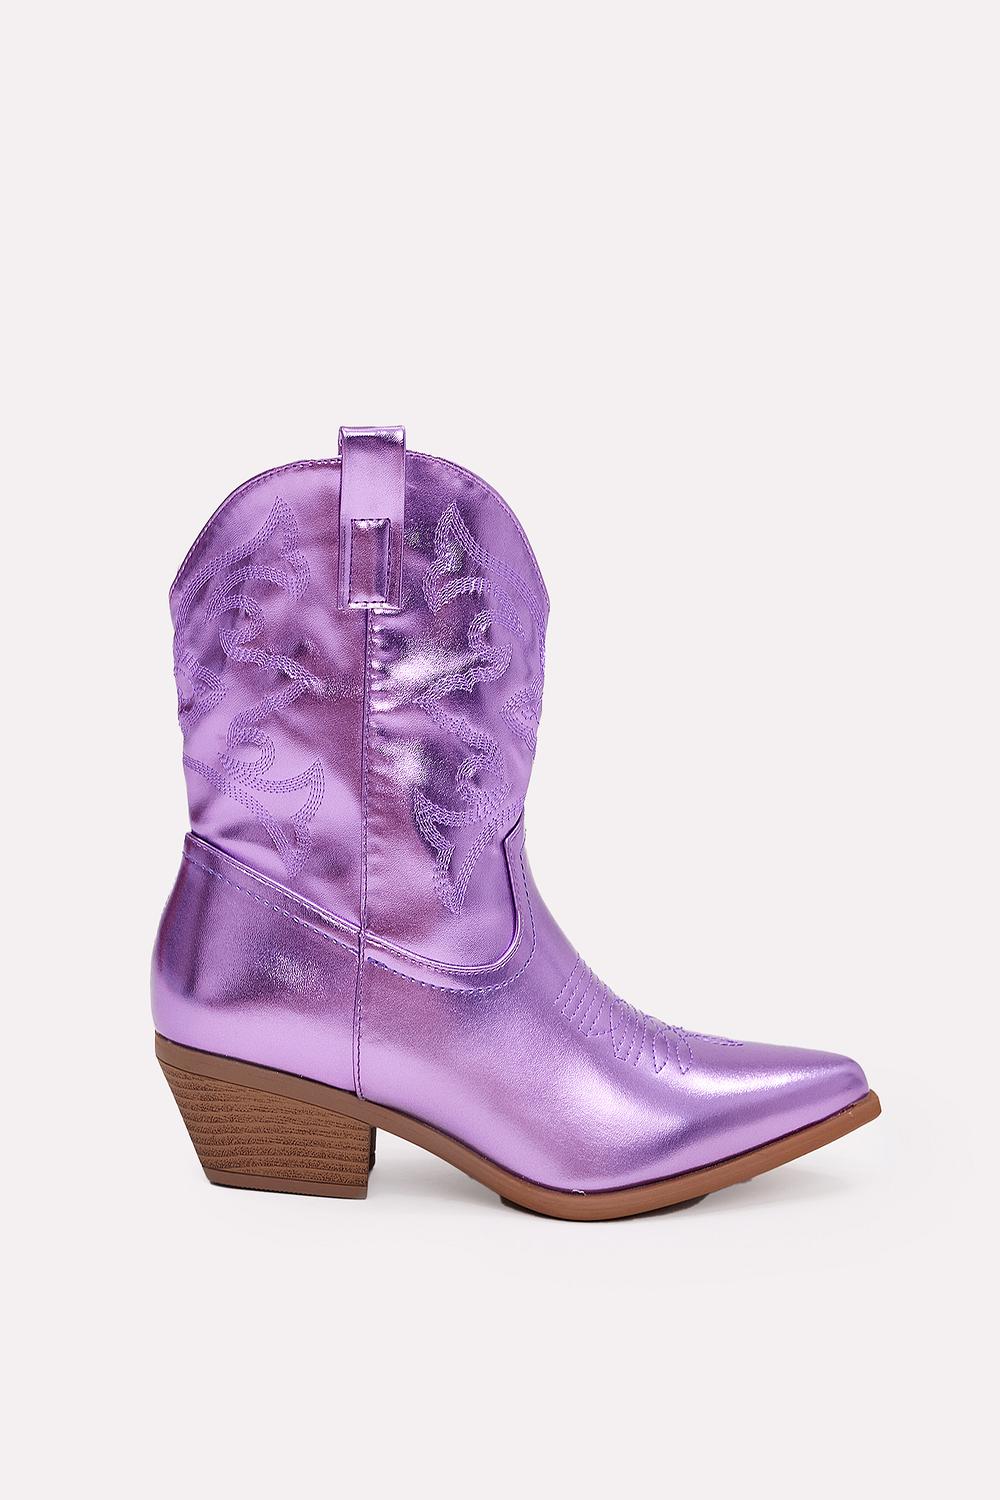 Purple metallic cowboy boots